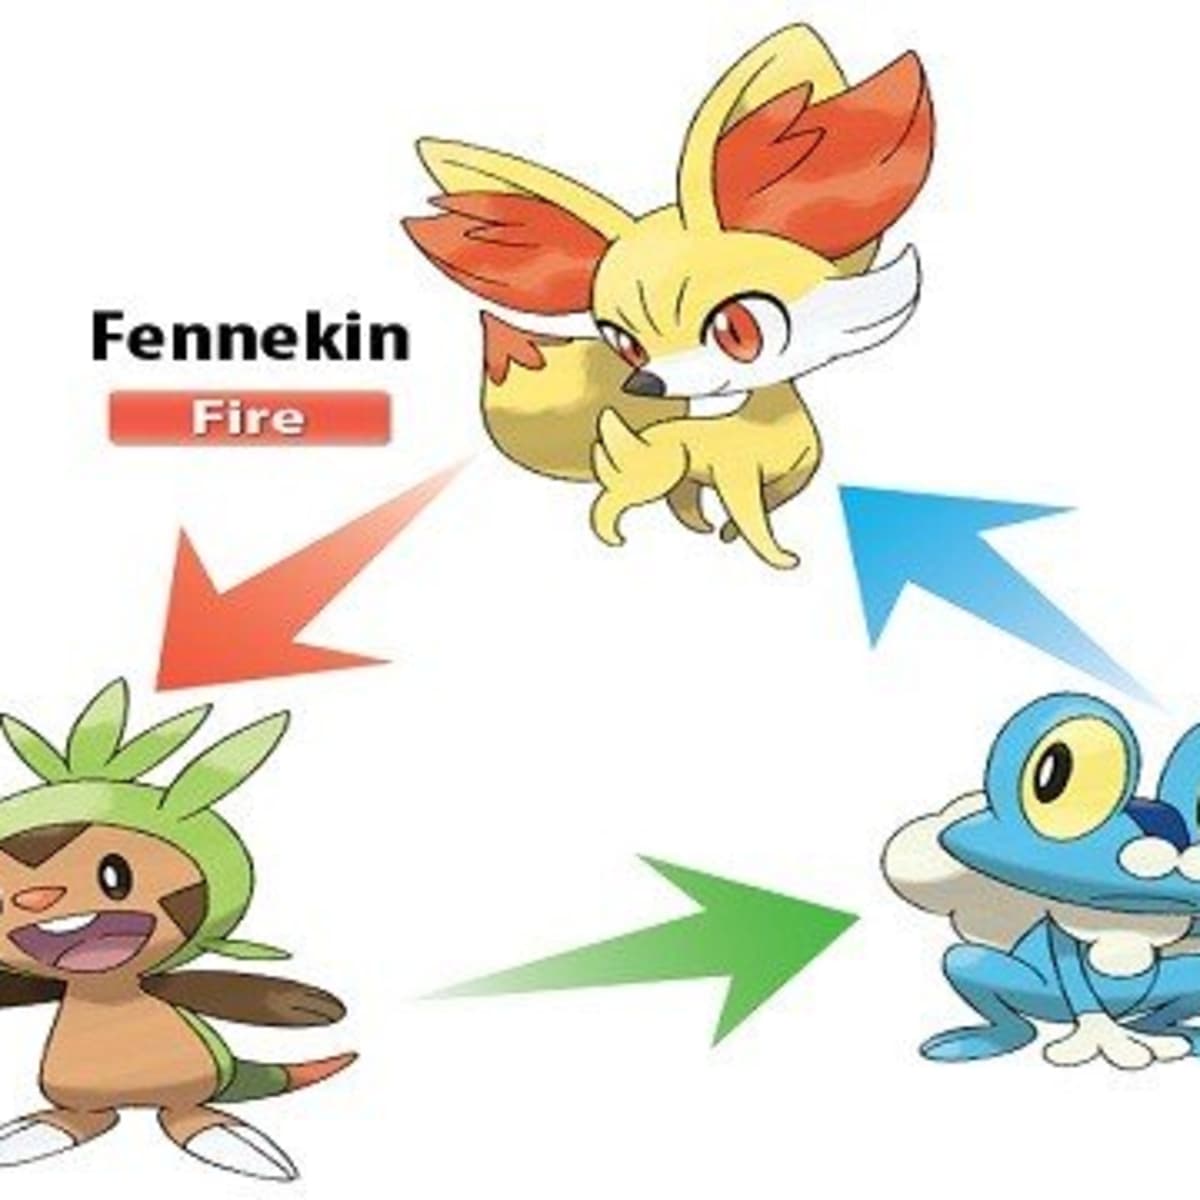 fennekin second evolution name